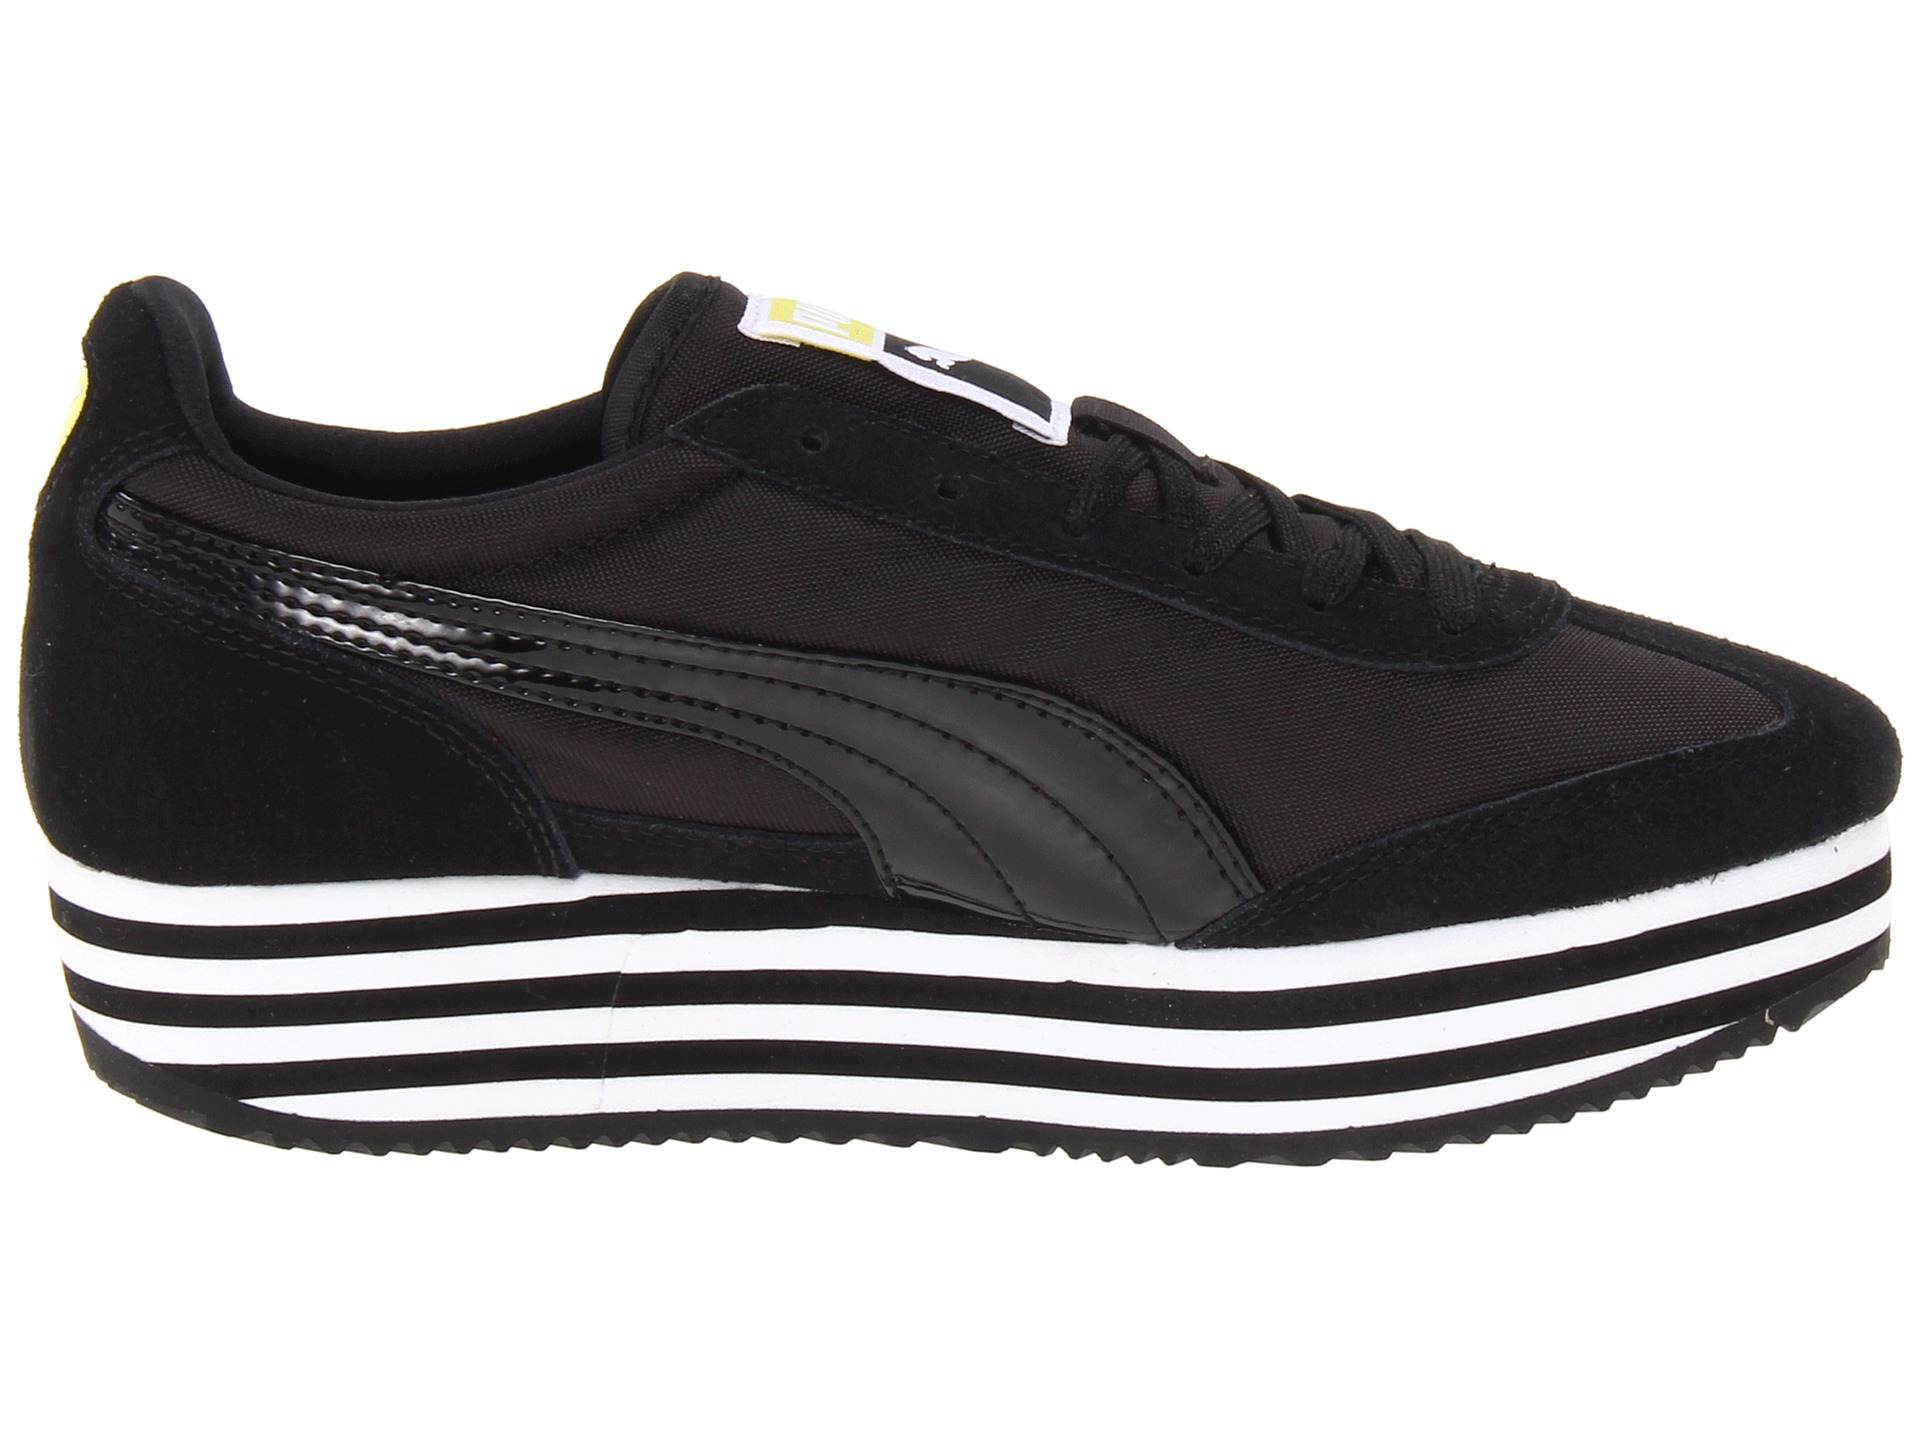 Puma Sf77 Platform Black, Shoes | Shipped Free at Zappos